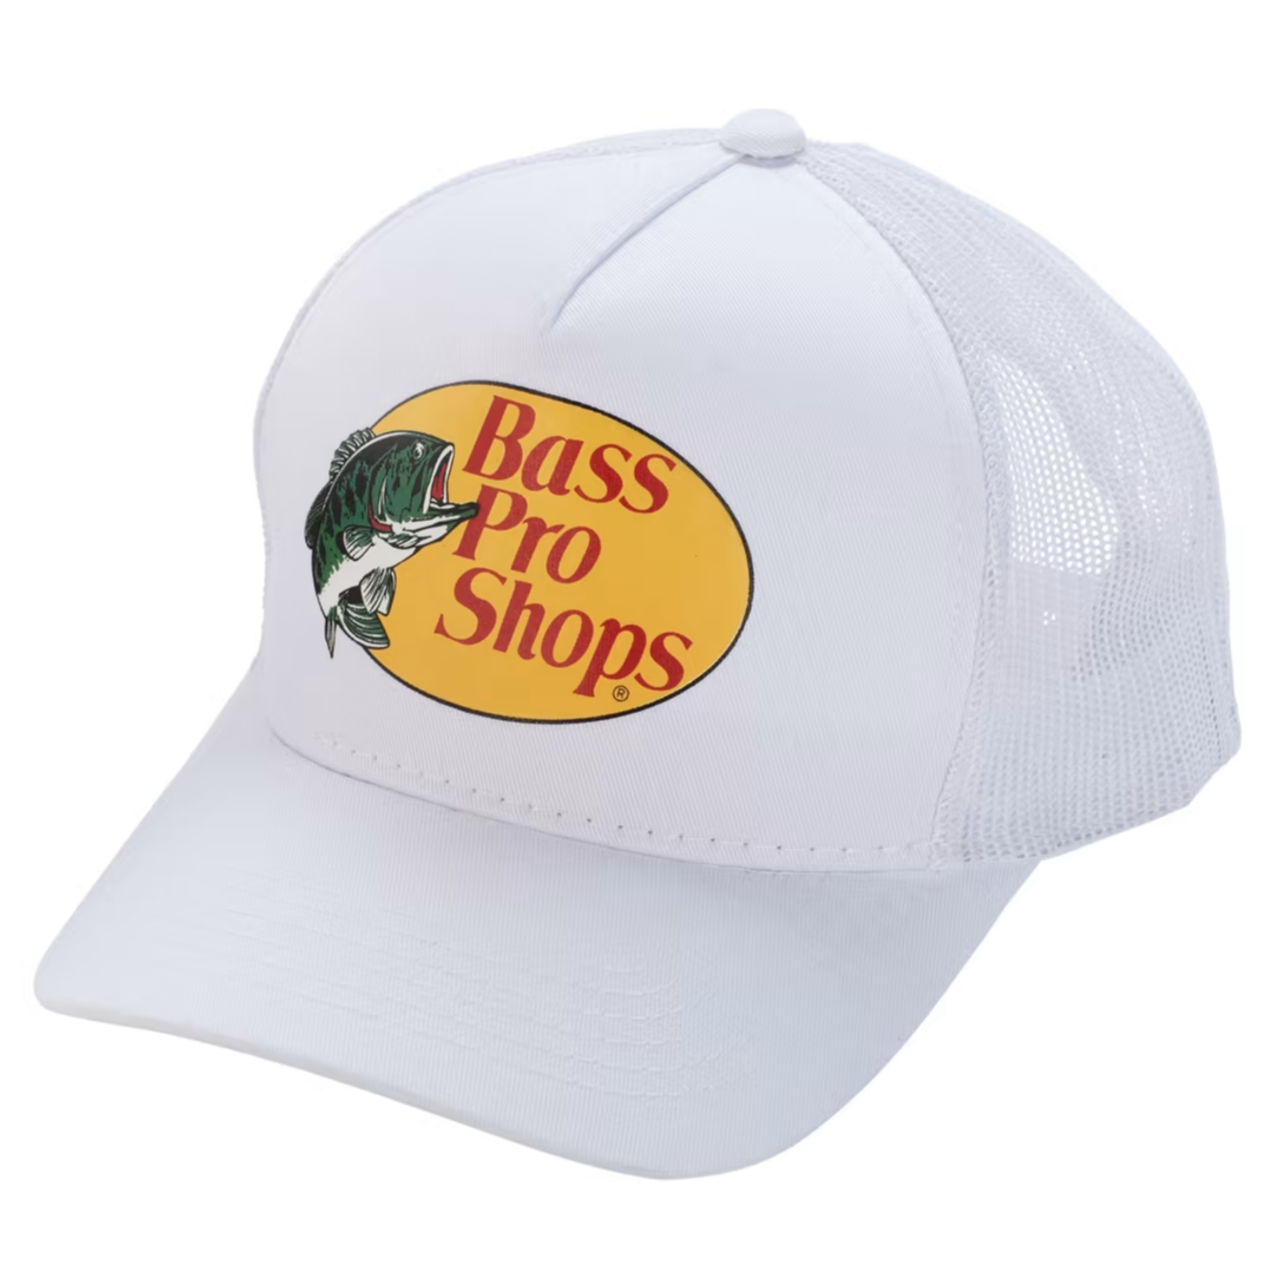 Bass Pro Shops Mesh Trucker Cap White - Boaters World